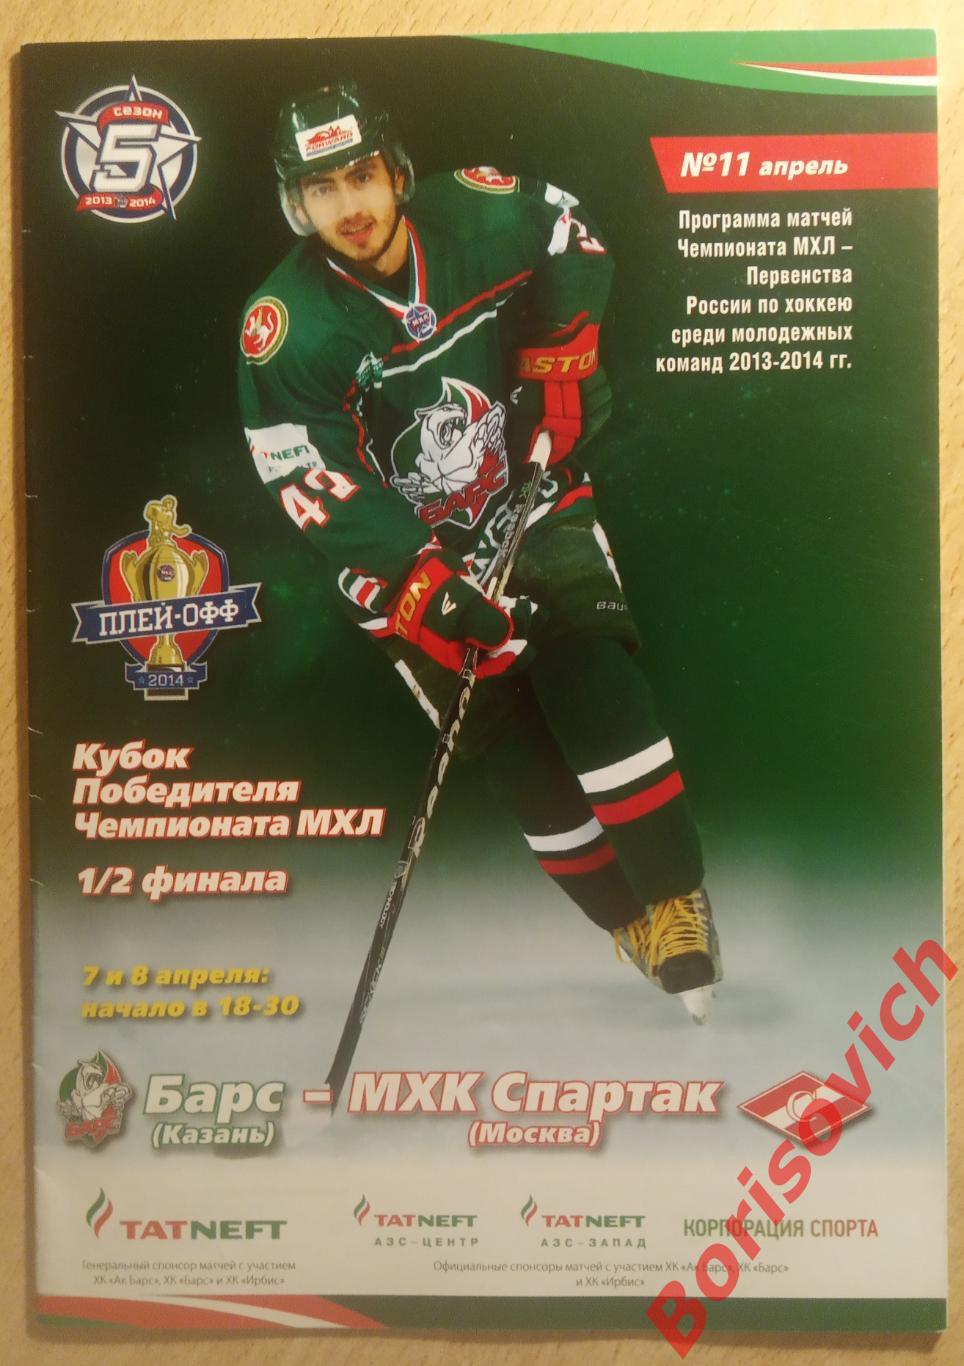 Барс Казань - МХК Спартак Москва 07,08-04-2014